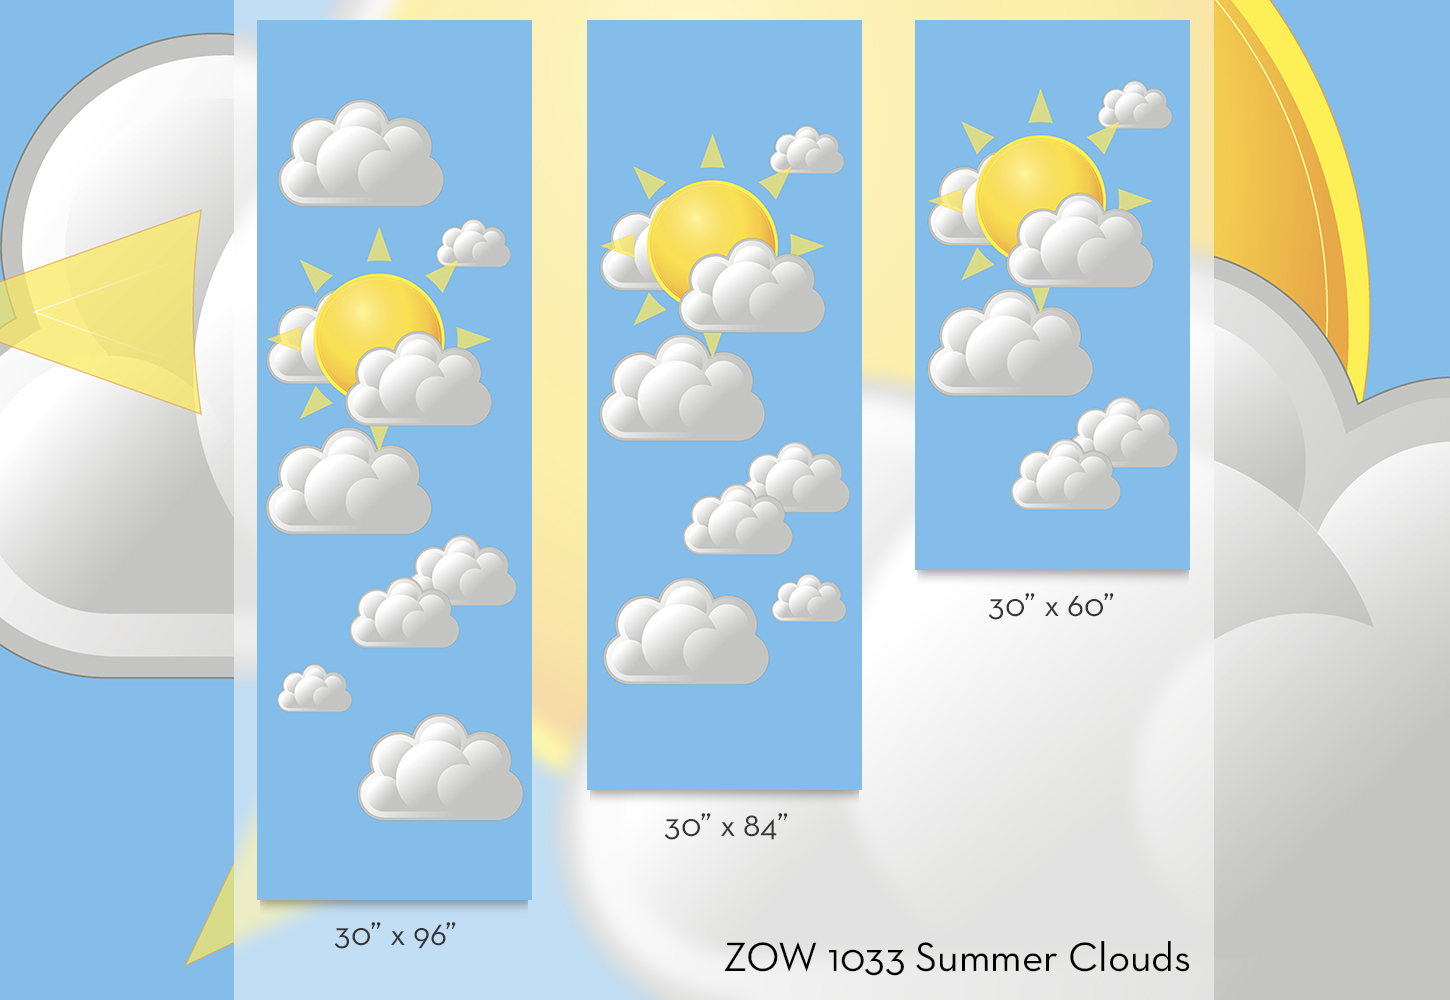 ZOW 1033 Summer Clouds